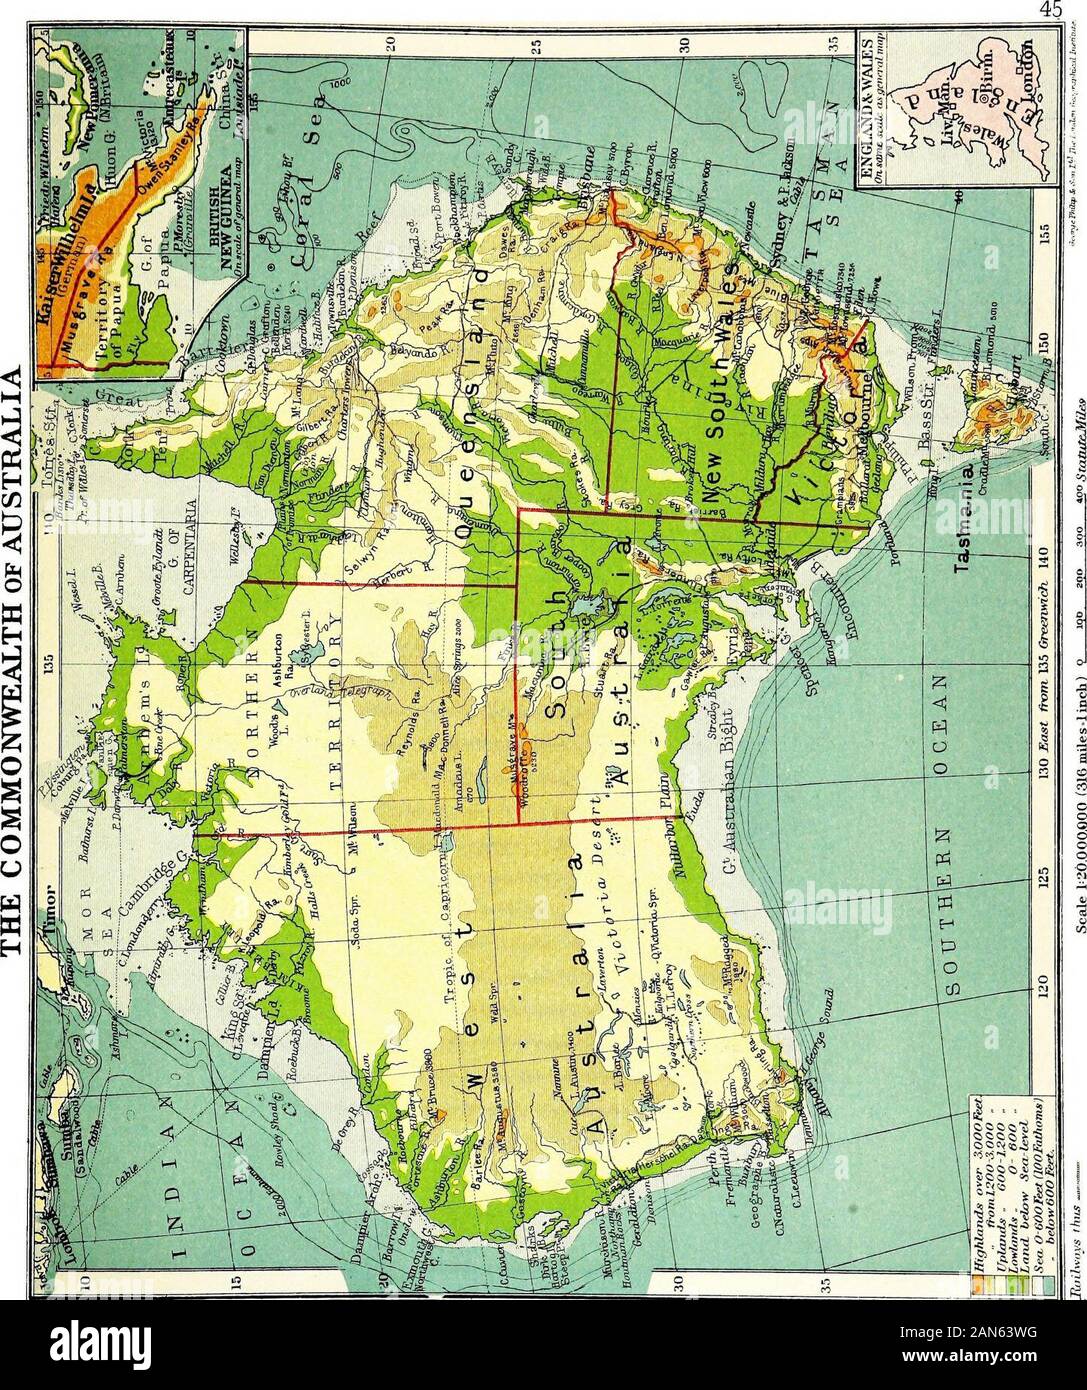 An Atlas Of Commercial Geography Scale 1 25 400 Miles Linch 9 Qq Aoo Aoo Qq 500 Statutemu S Fl Ihi T I Iti F Linuf N Sa Gr Aphu 4ilinao Oai Dominion Of New Zealand Stock Photo